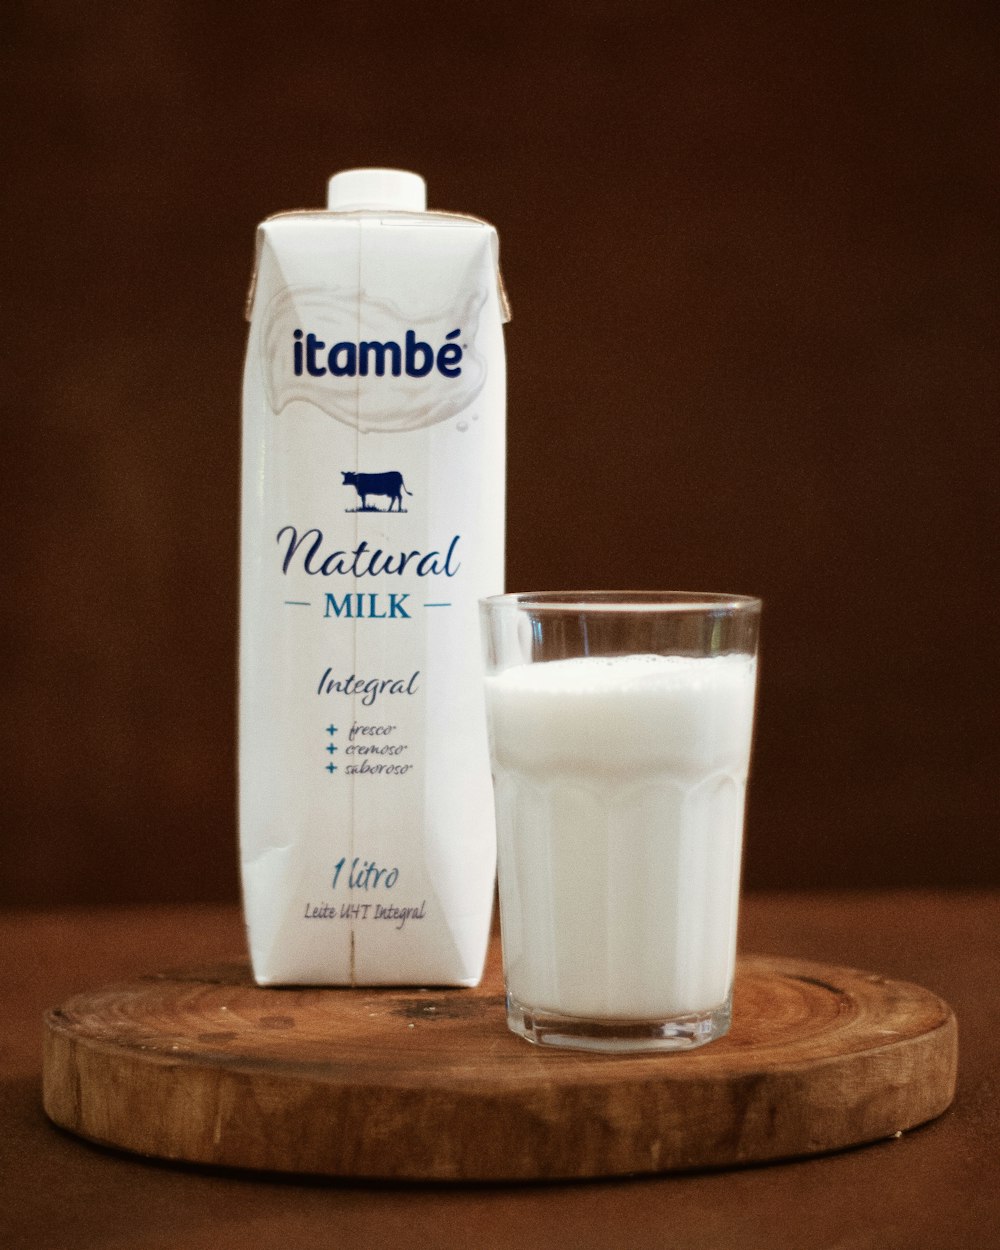 Itambe Natural milk carton